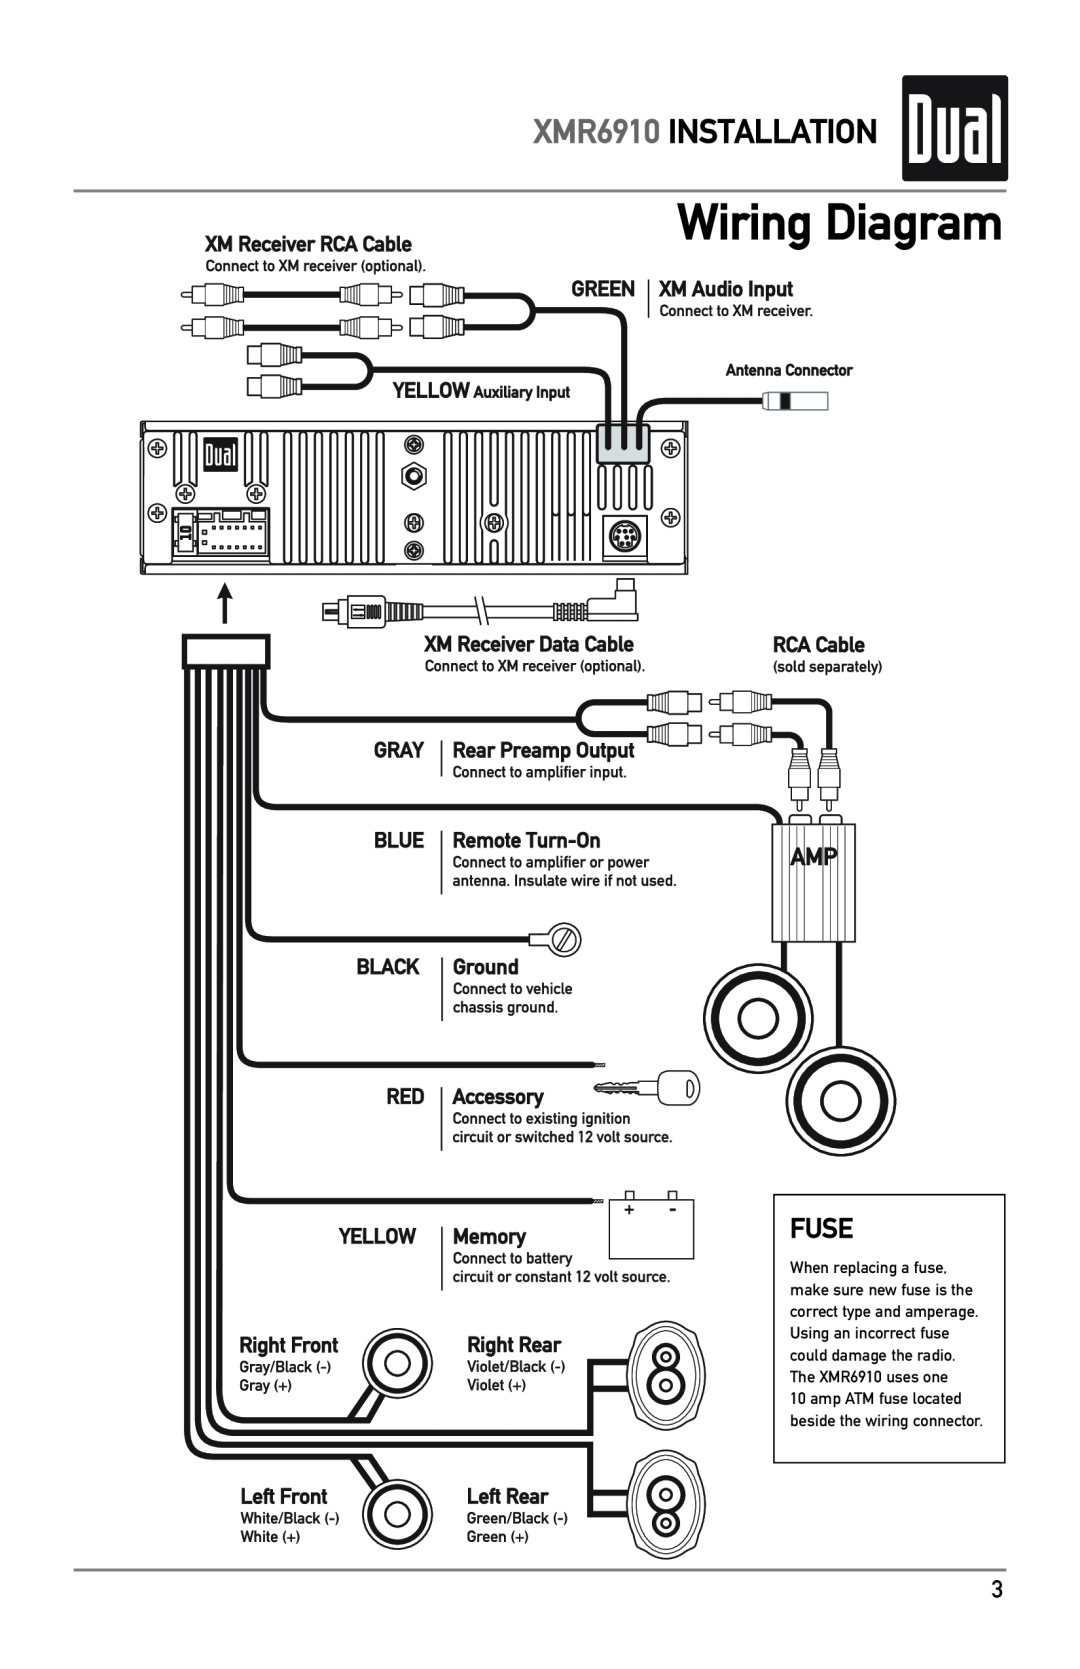 XM Satellite Radio owner manual Wiring Diagram, Fuse, XMR6910 INSTALLATION 